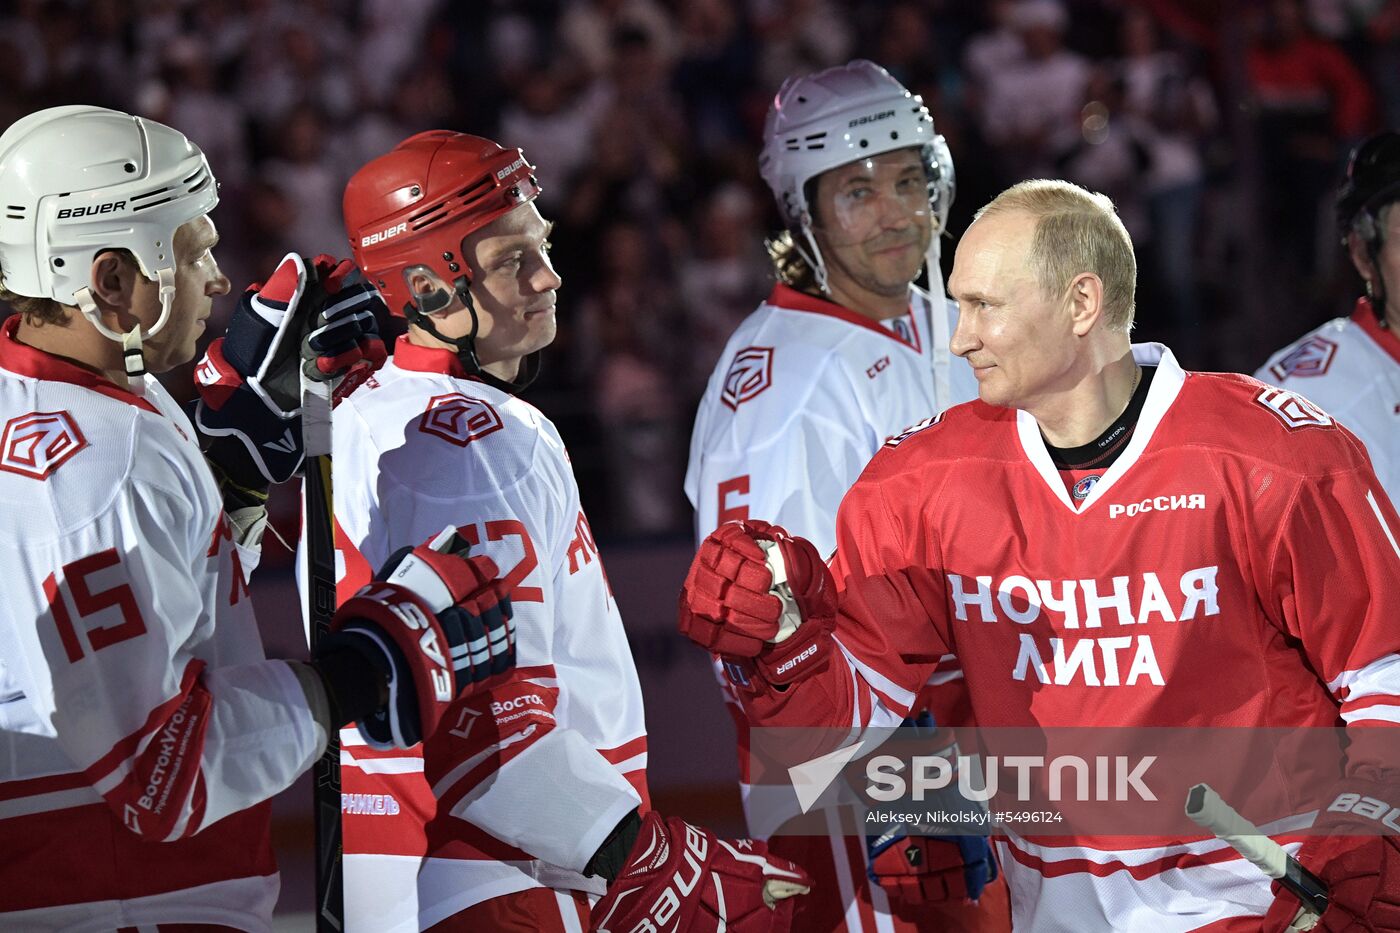 President Putin's working trip to Sochi